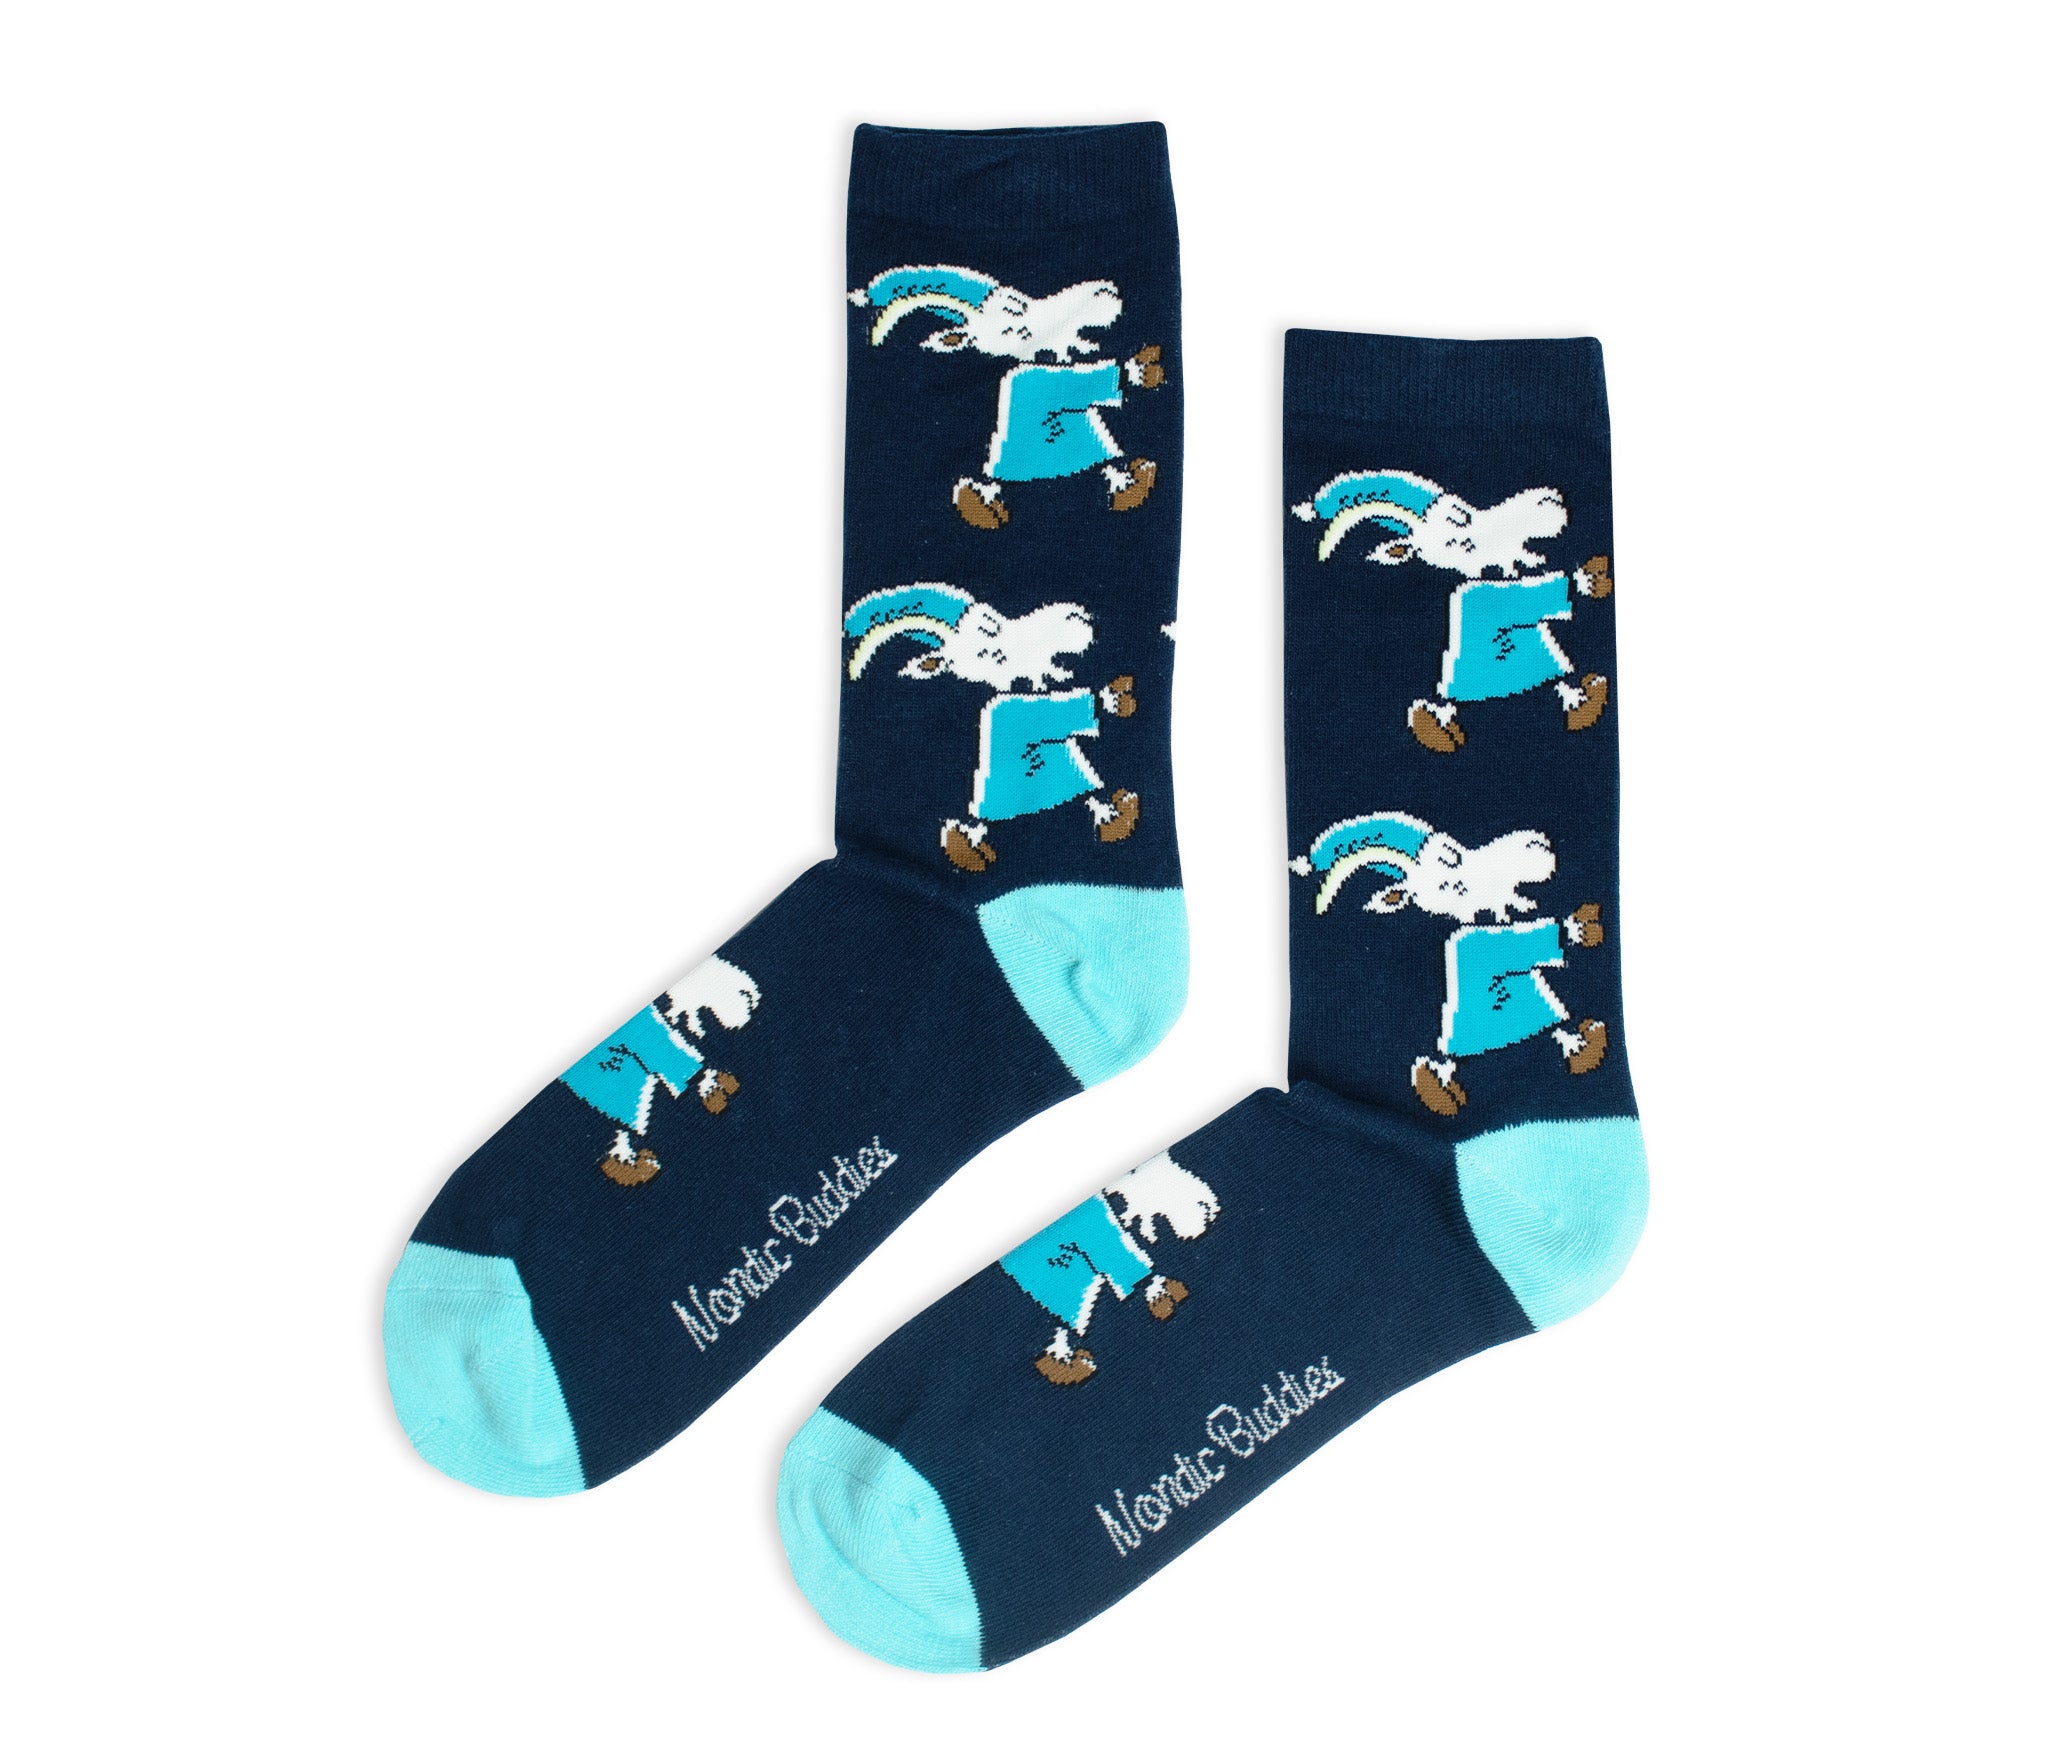 Mr. Clutterbuck Men Socks - Blue